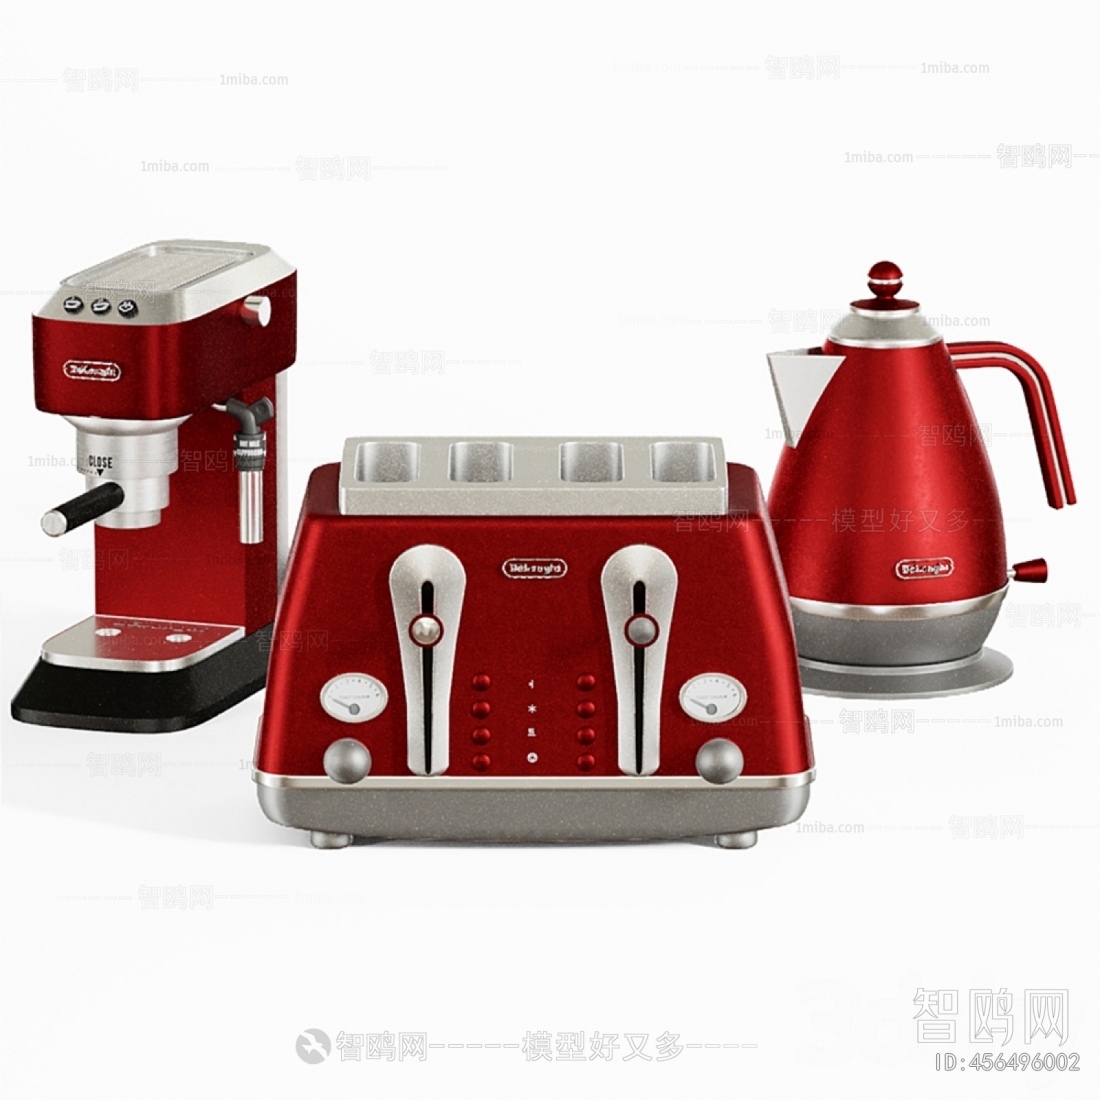 Modern Kitchen Electric Coffee Machine